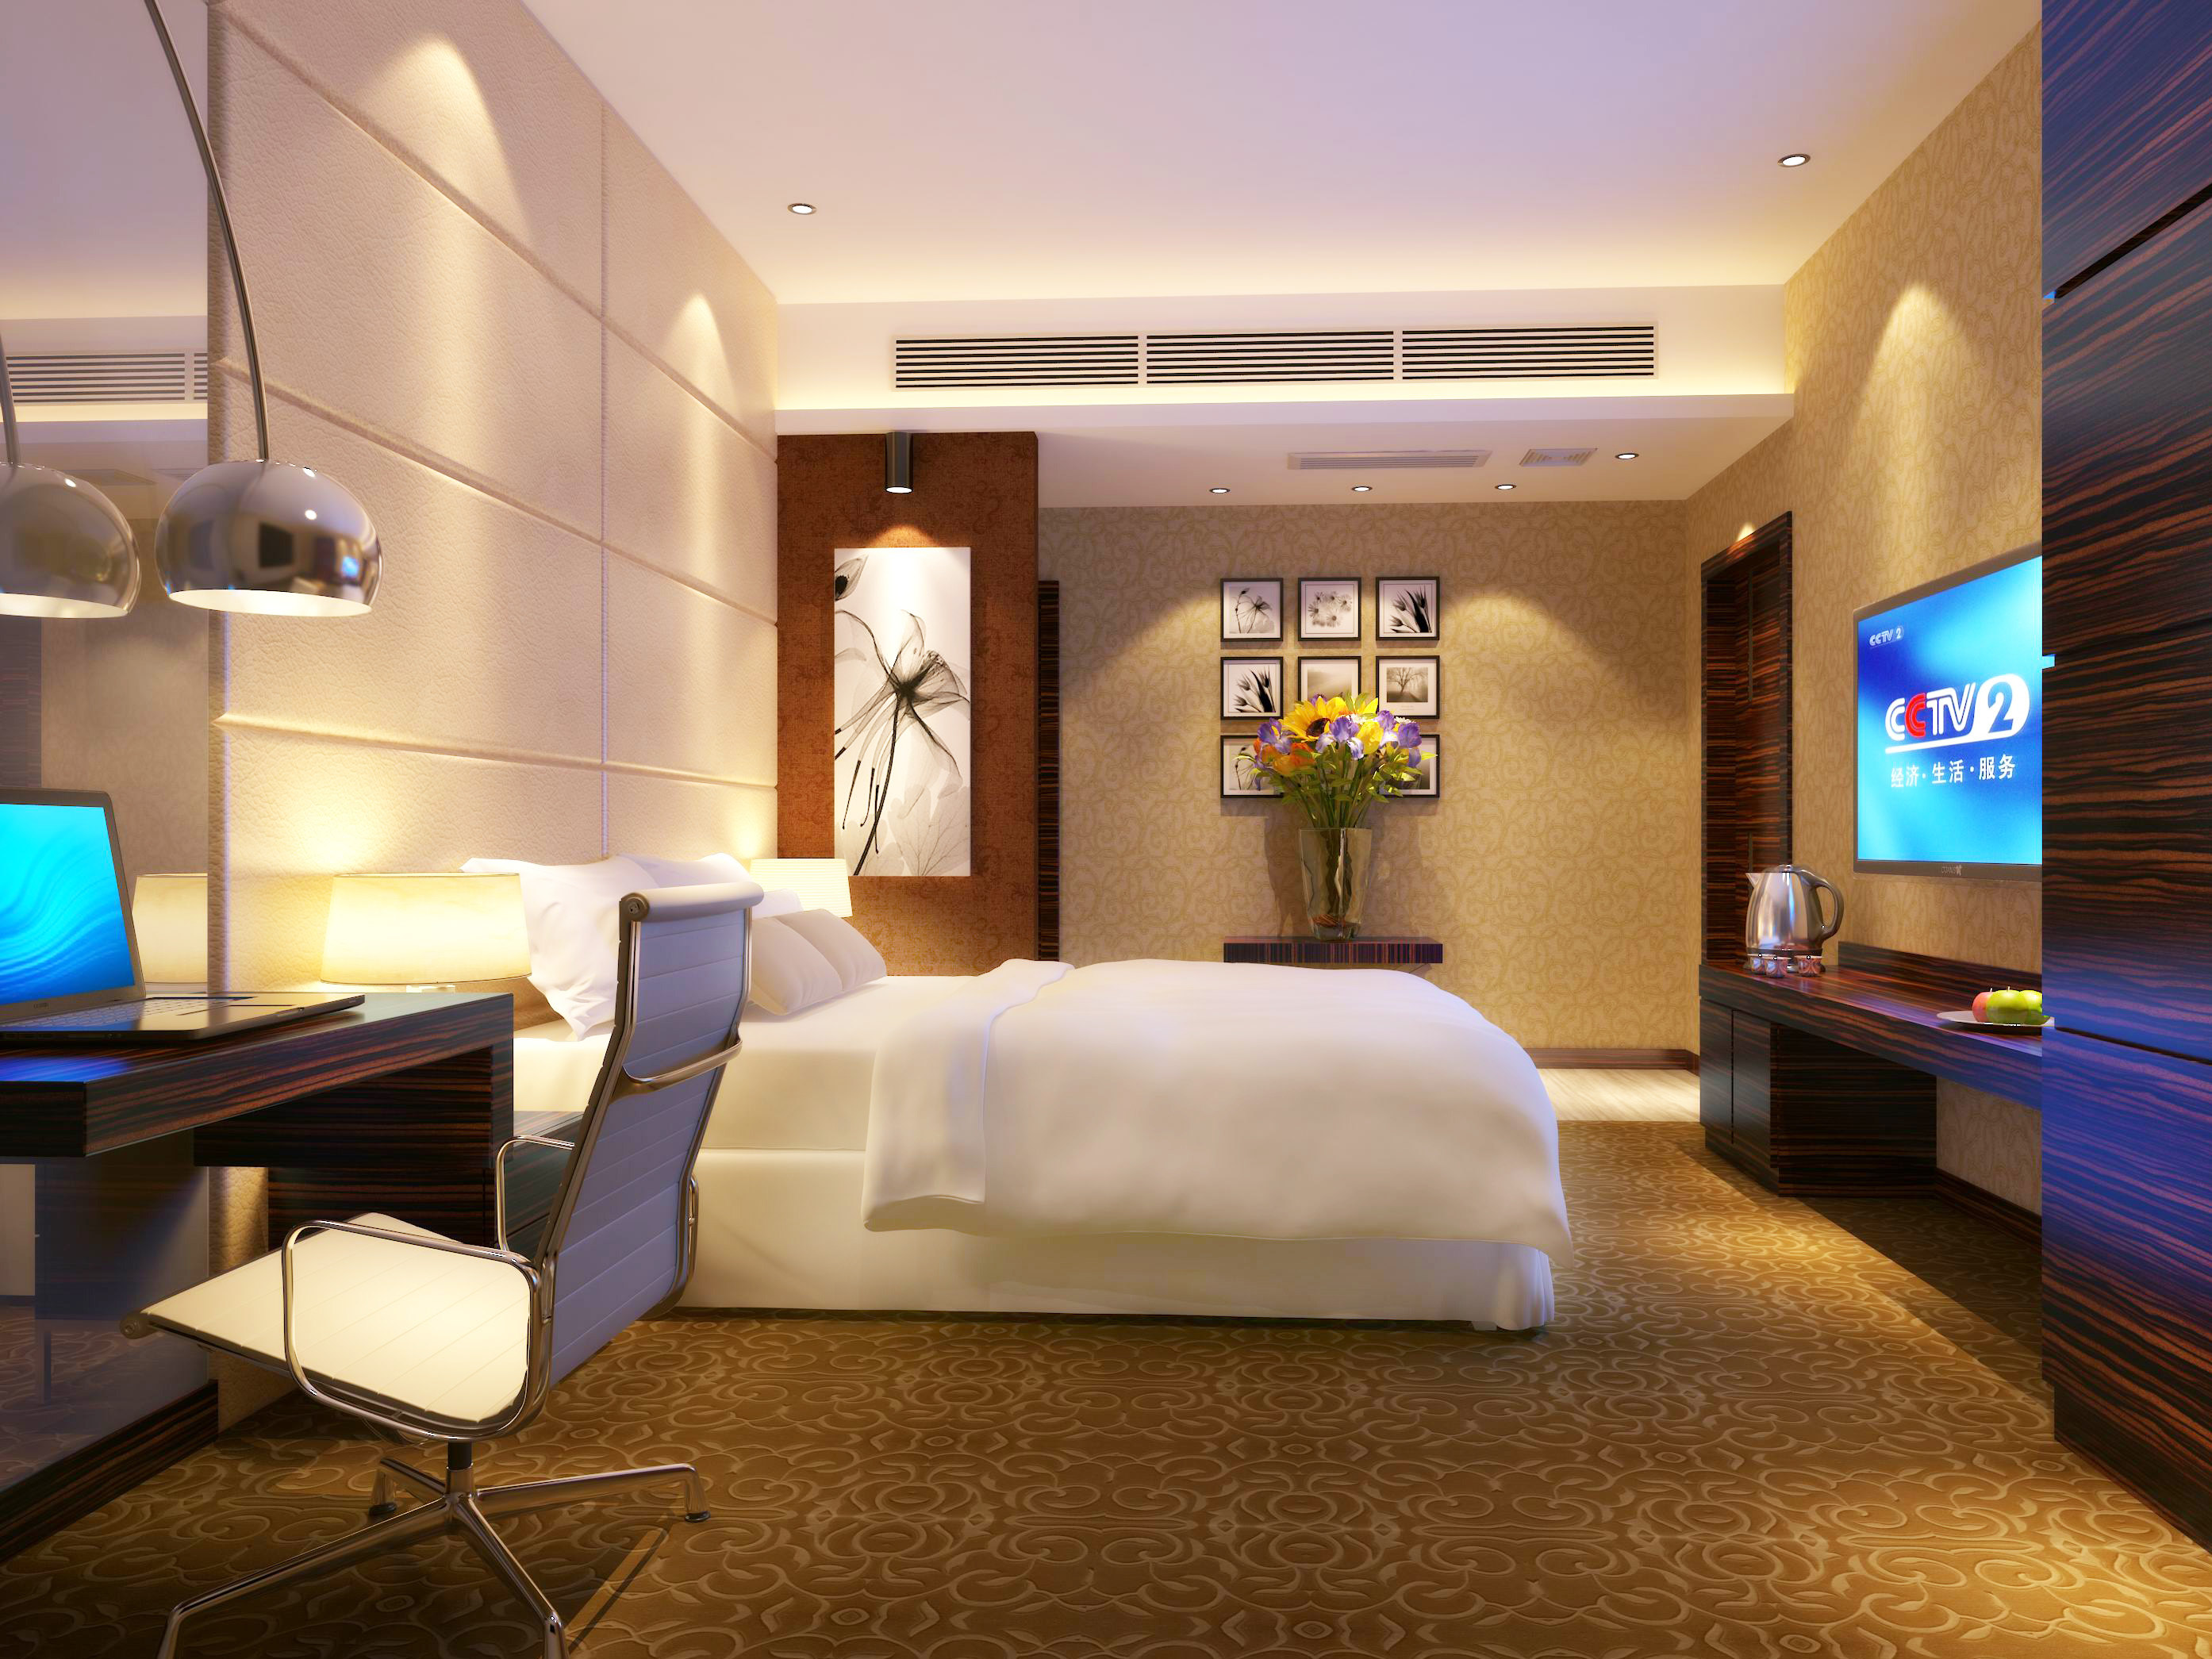 Junyue Hotel Rooms